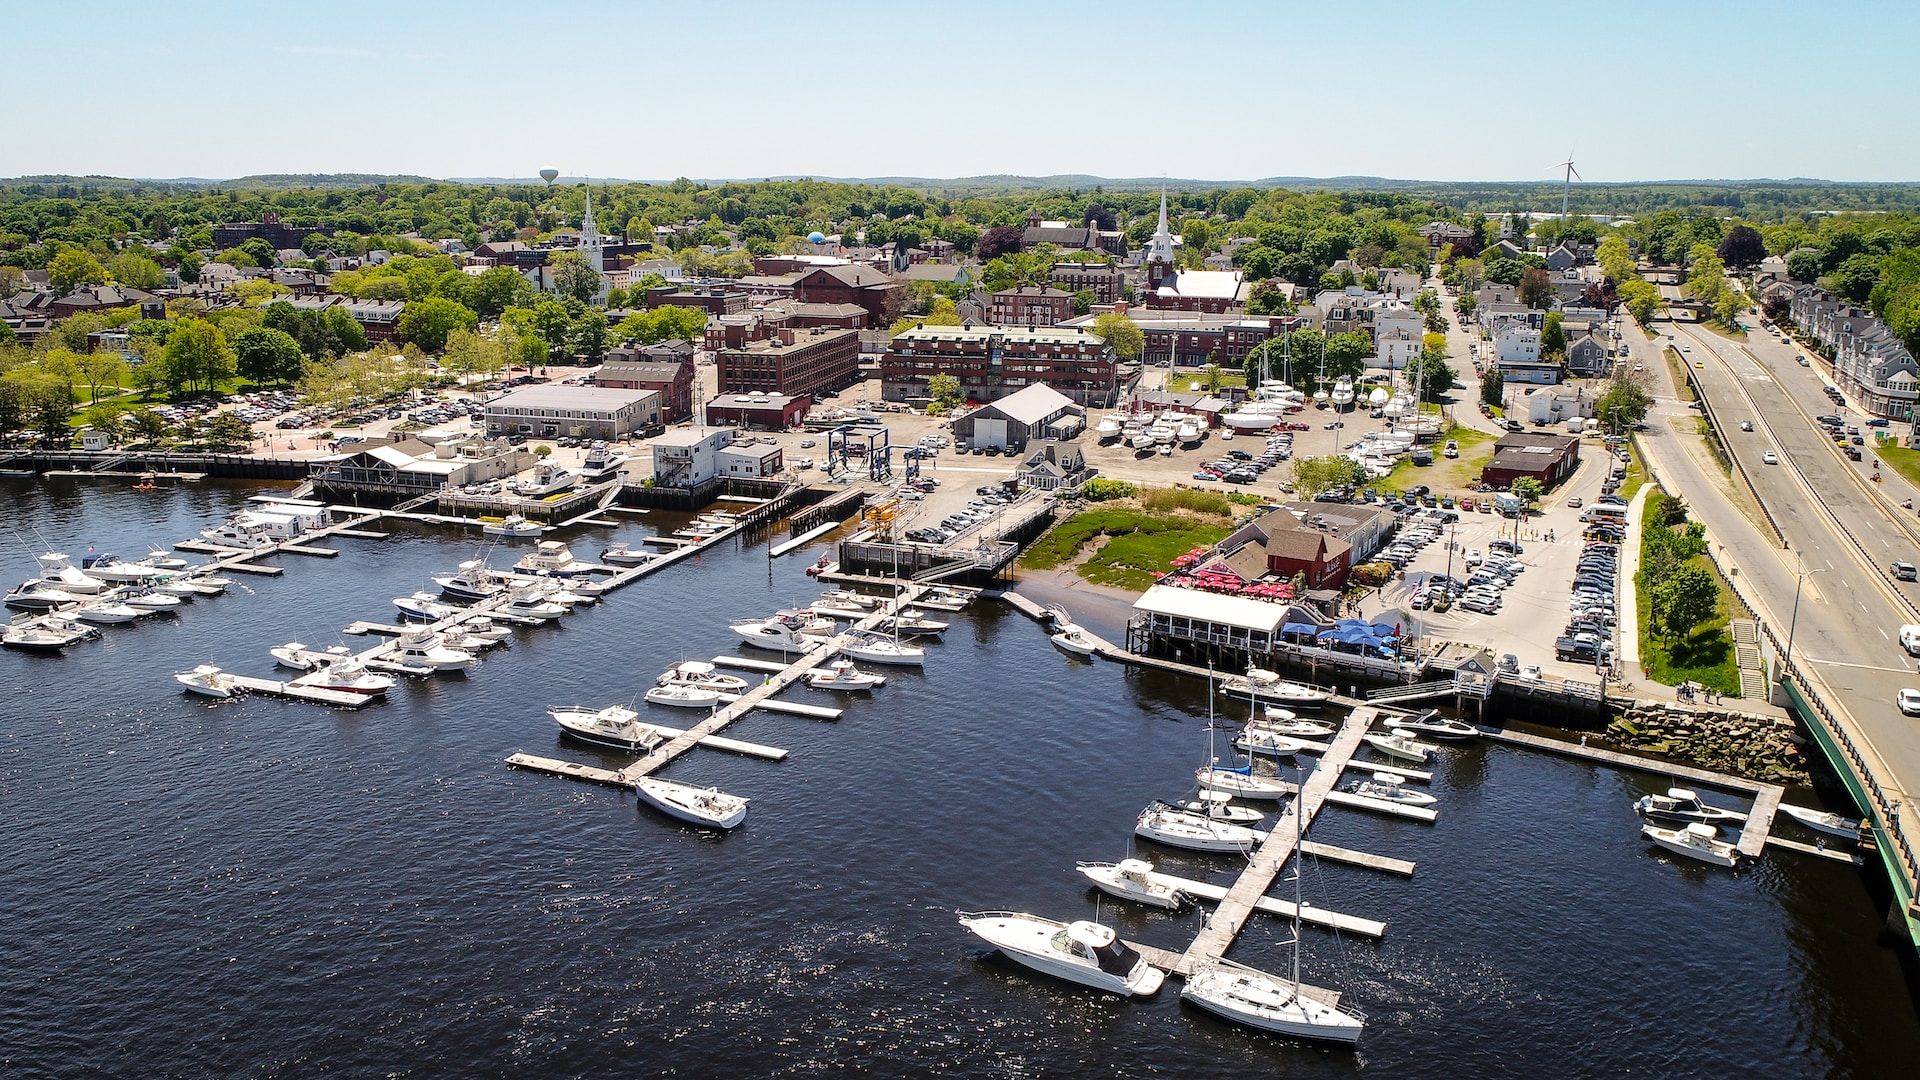 An aerial view of Newburyport, Massachusetts